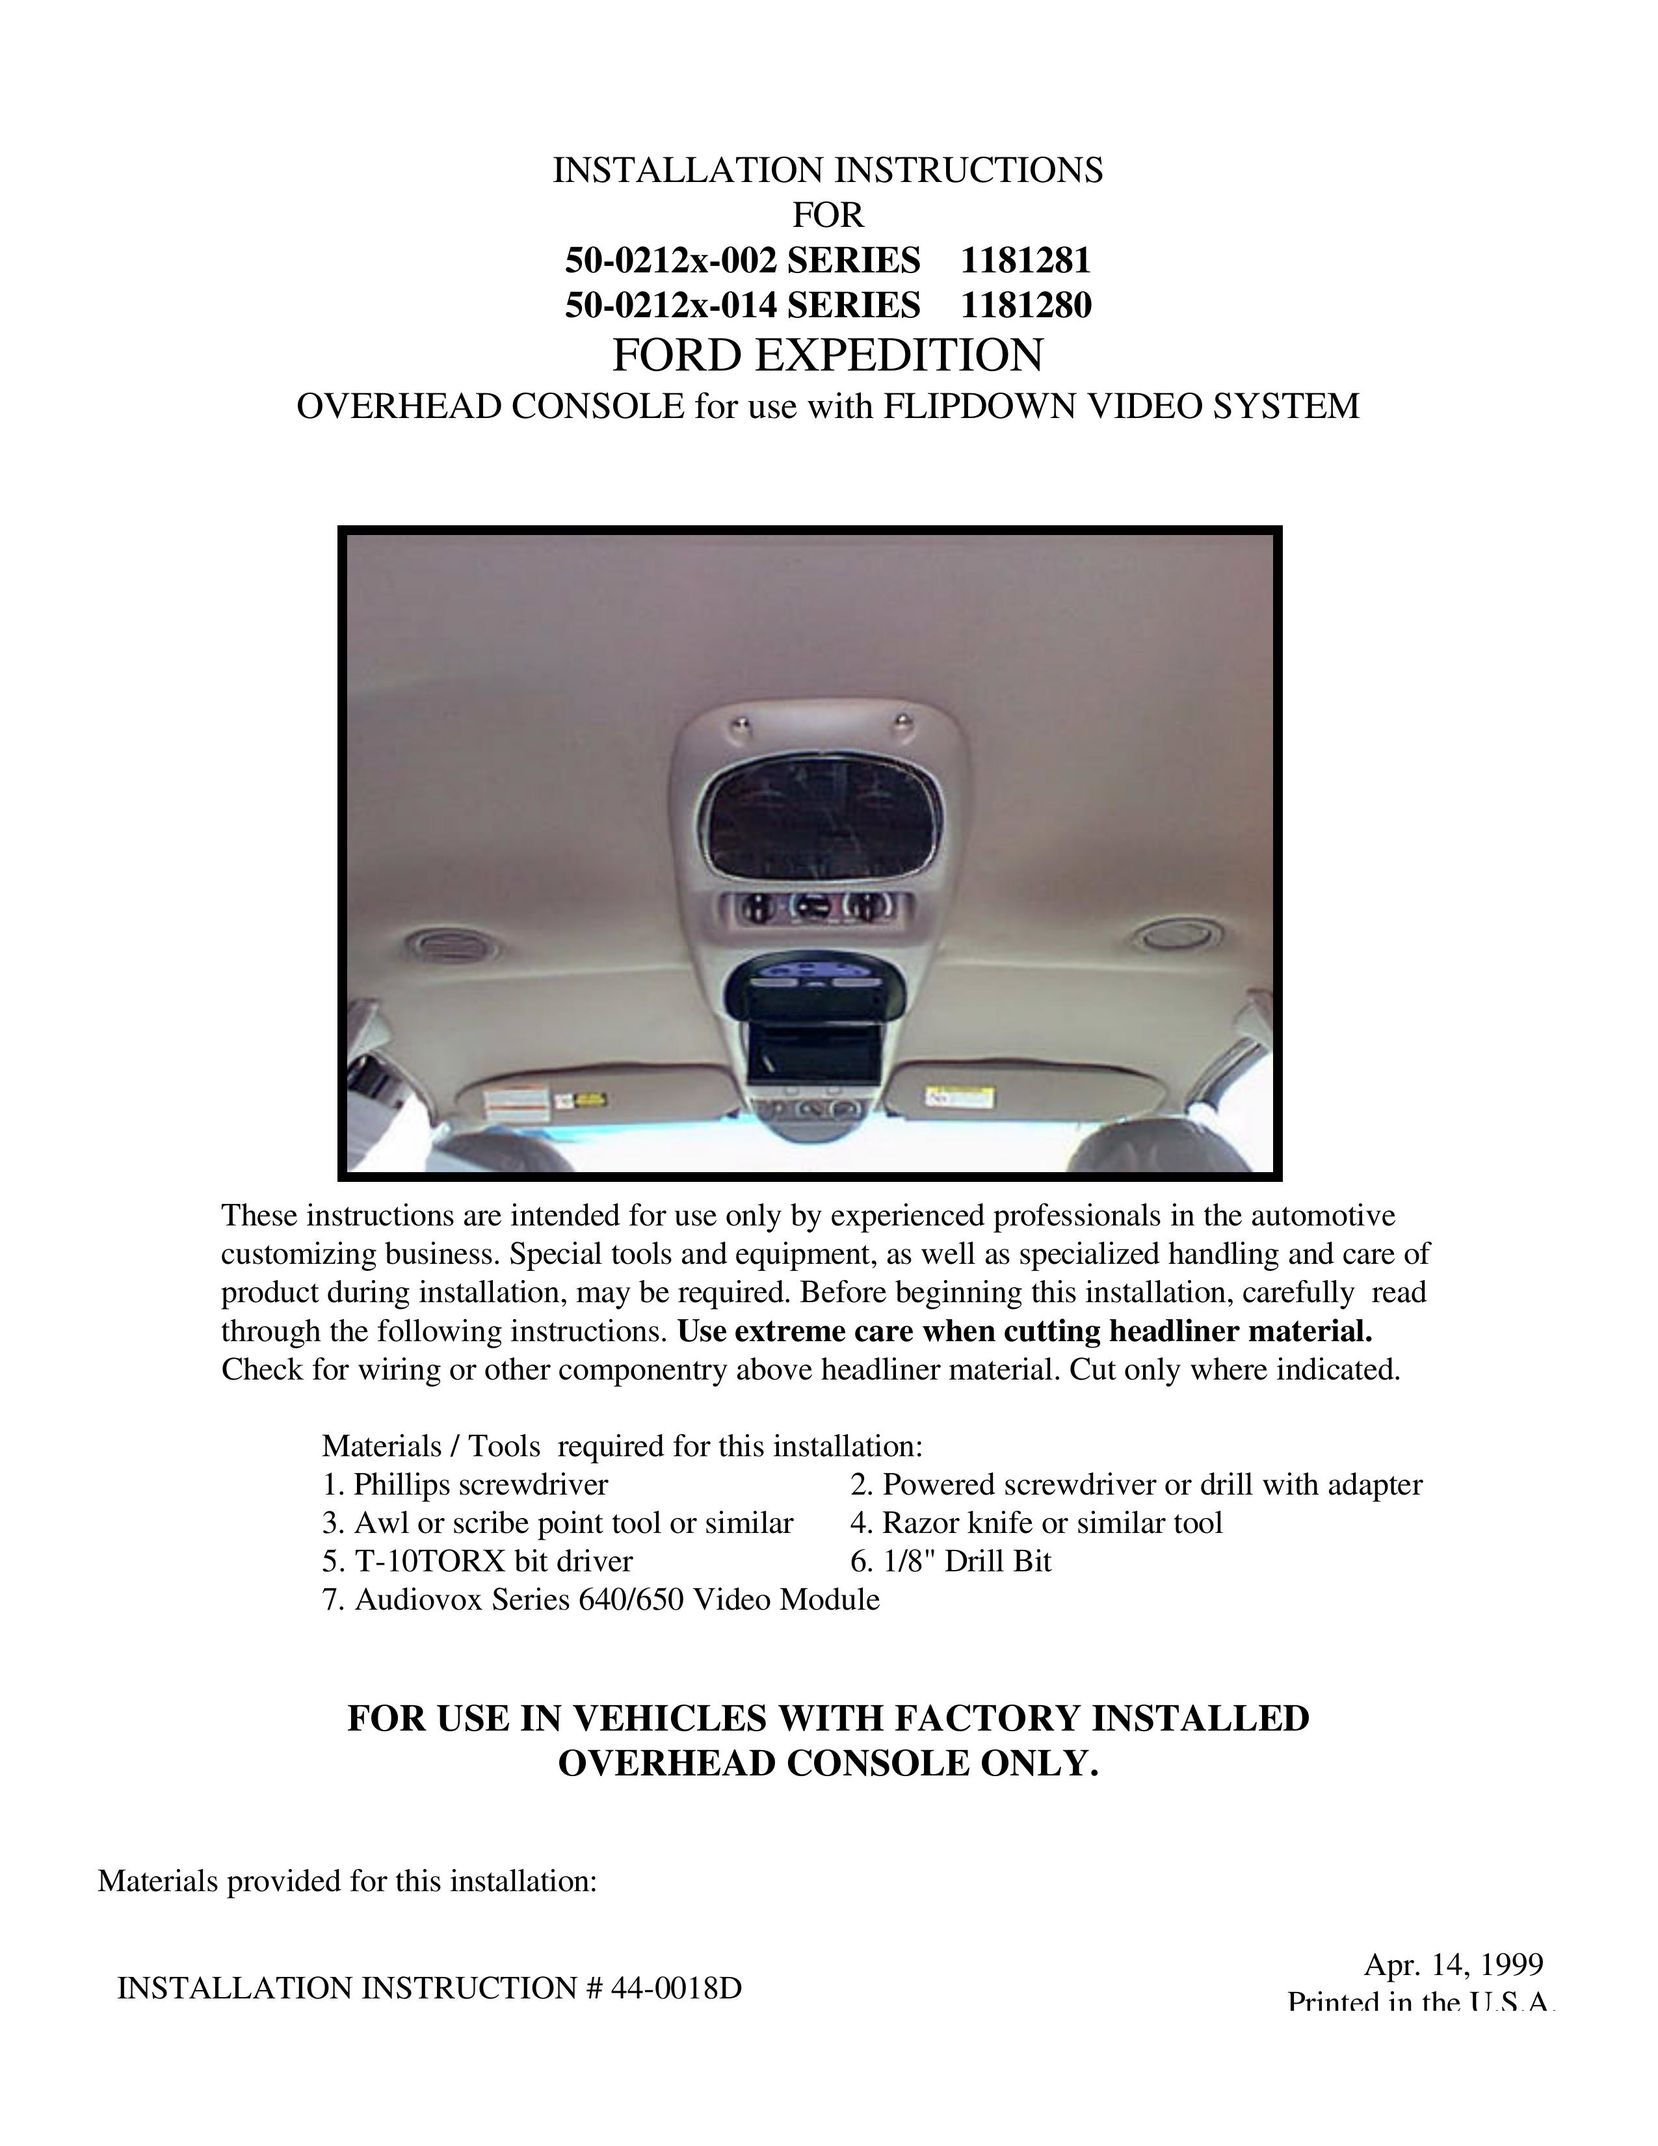 Carson Optical 1181280 Car Video System User Manual